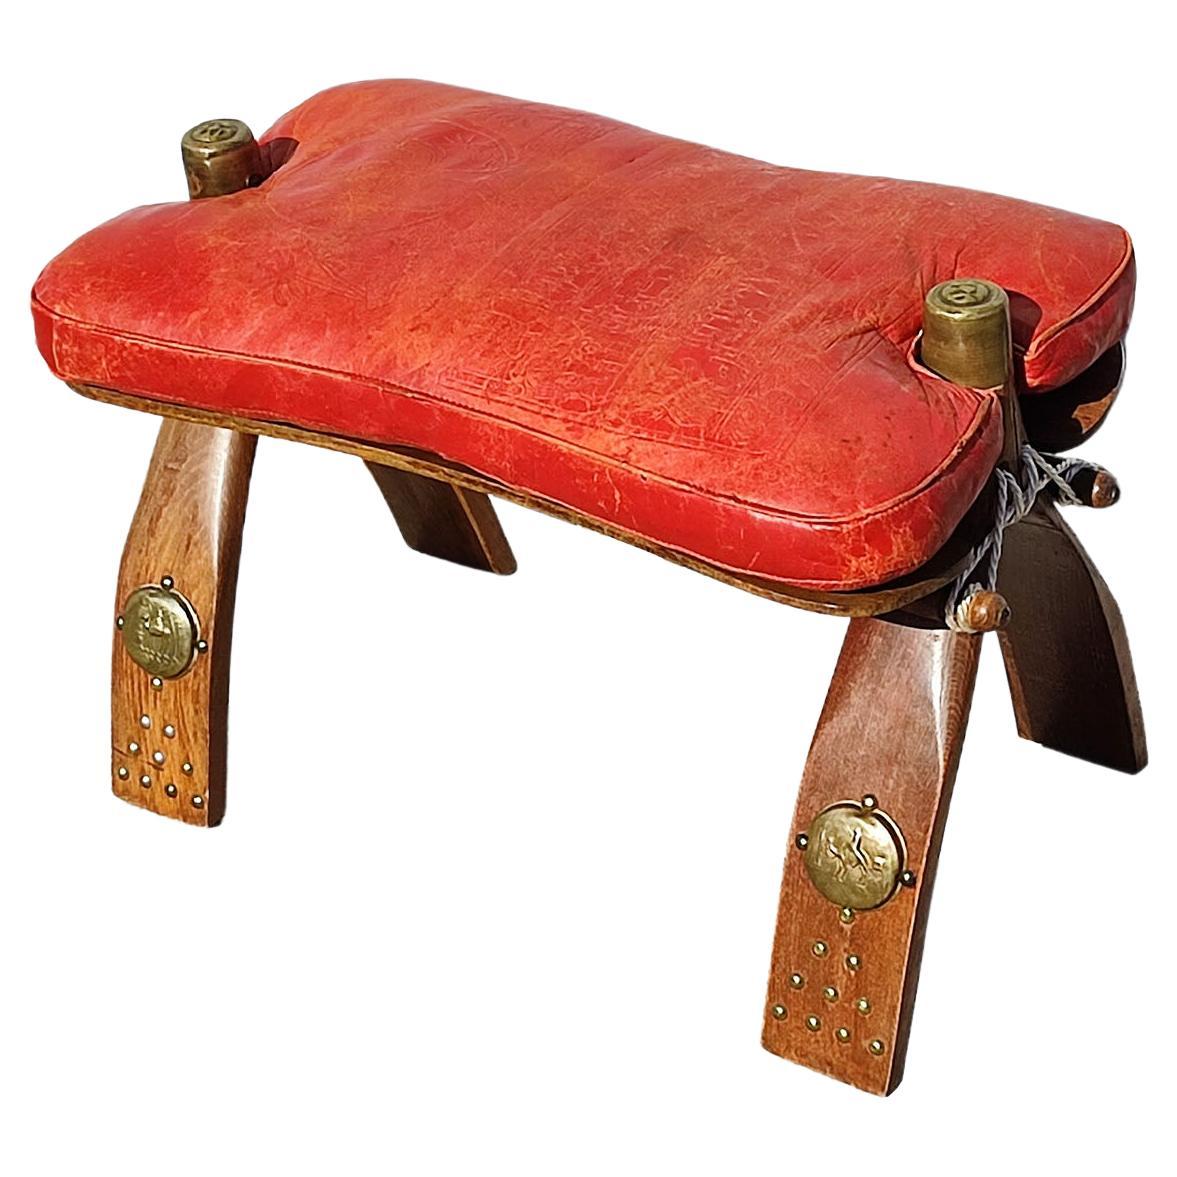 https://a.1stdibscdn.com/vintage-camel-leather-saddle-stool-ottoman-morocco-c1960-for-sale/f_9804/f_311846321679336276175/f_31184632_1679336276635_bg_processed.jpg